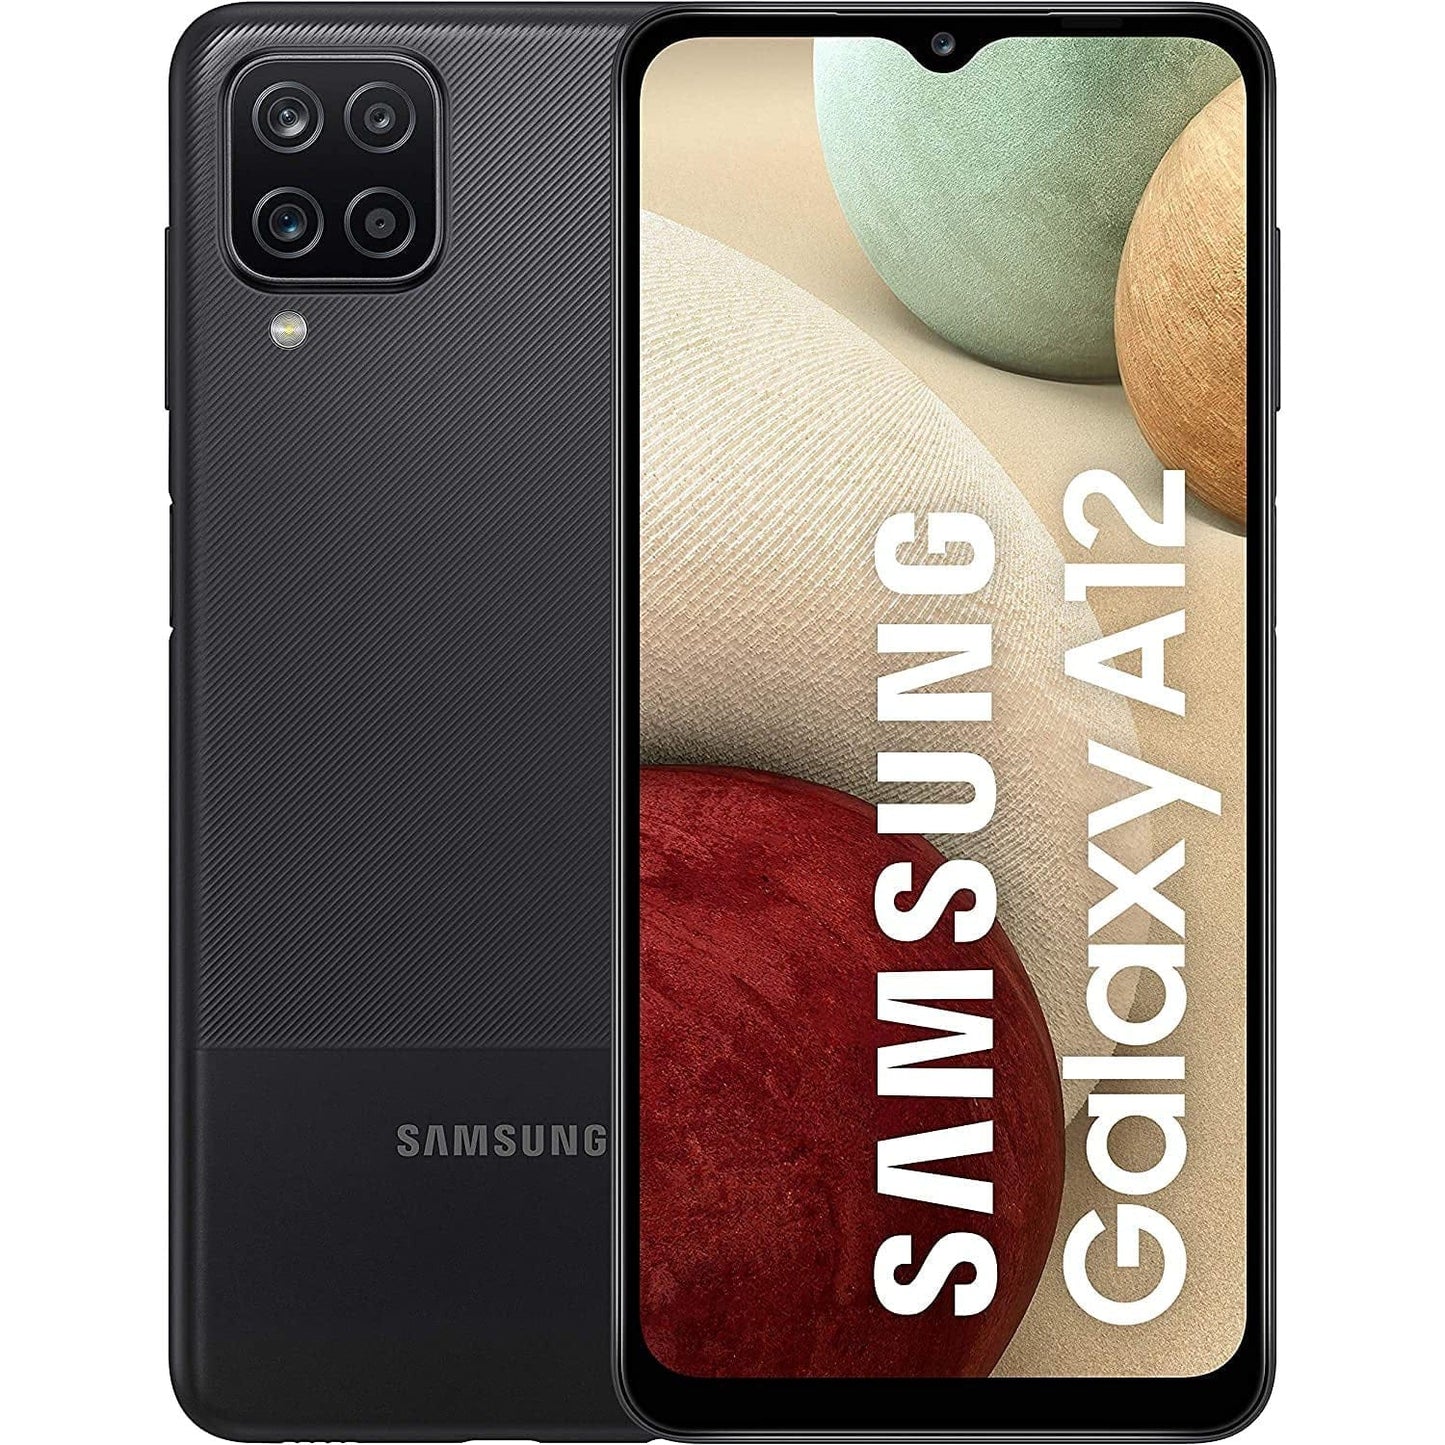 Metro by T-Mobile Samsung Galaxy A12, 32gb, Black - Prepaid Smar